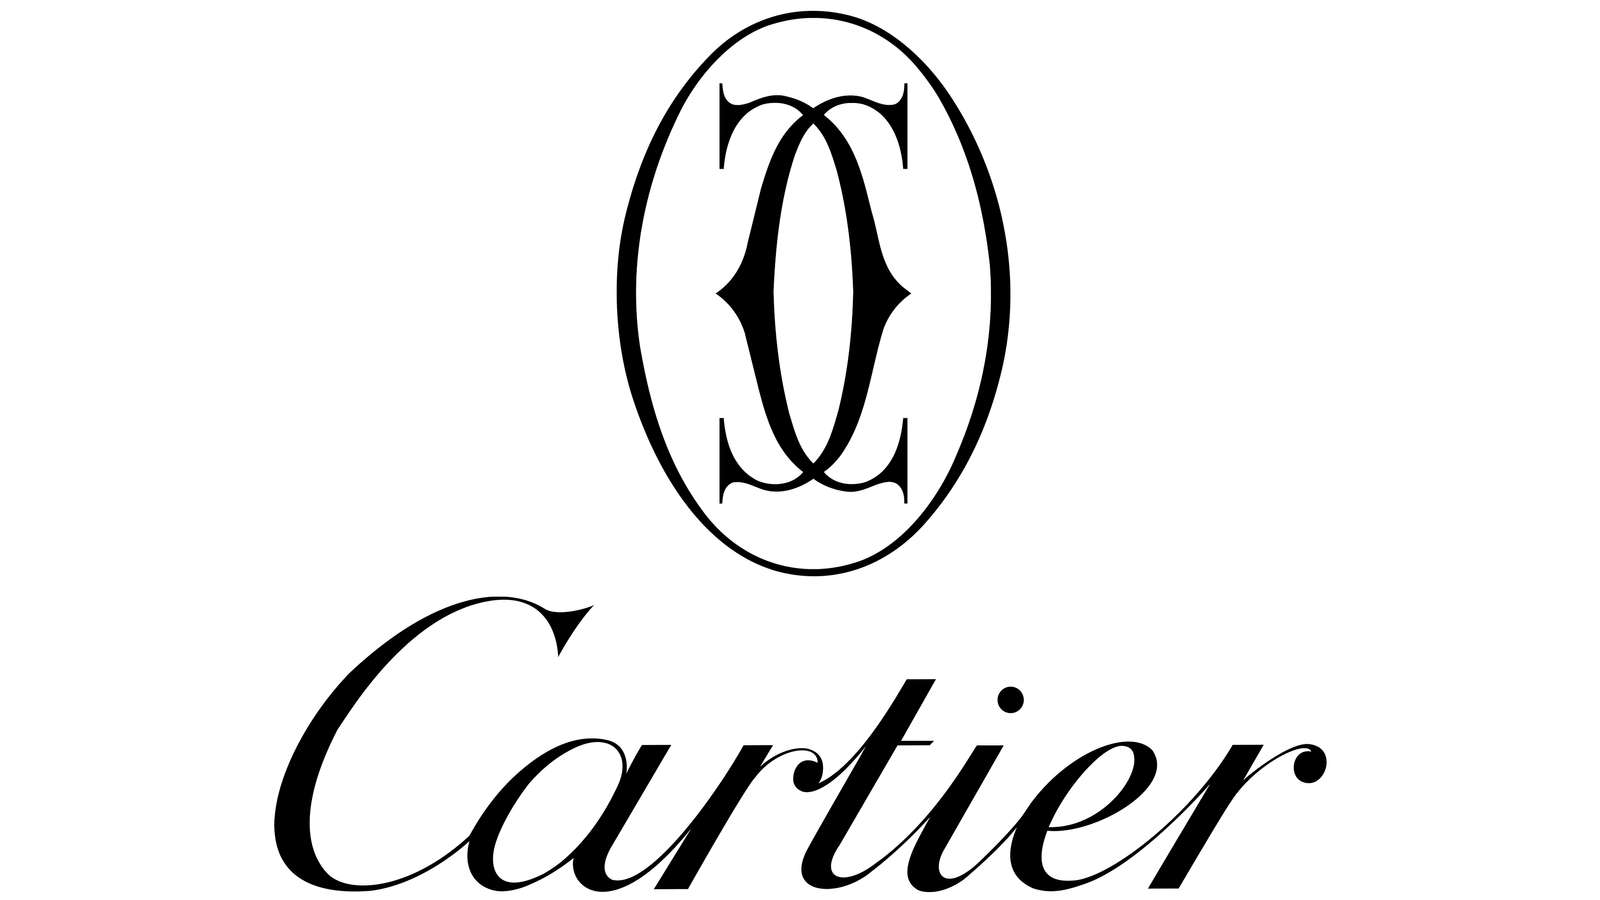 6 - quebra-cabeça - Cartier puzzle online a partir de fotografia